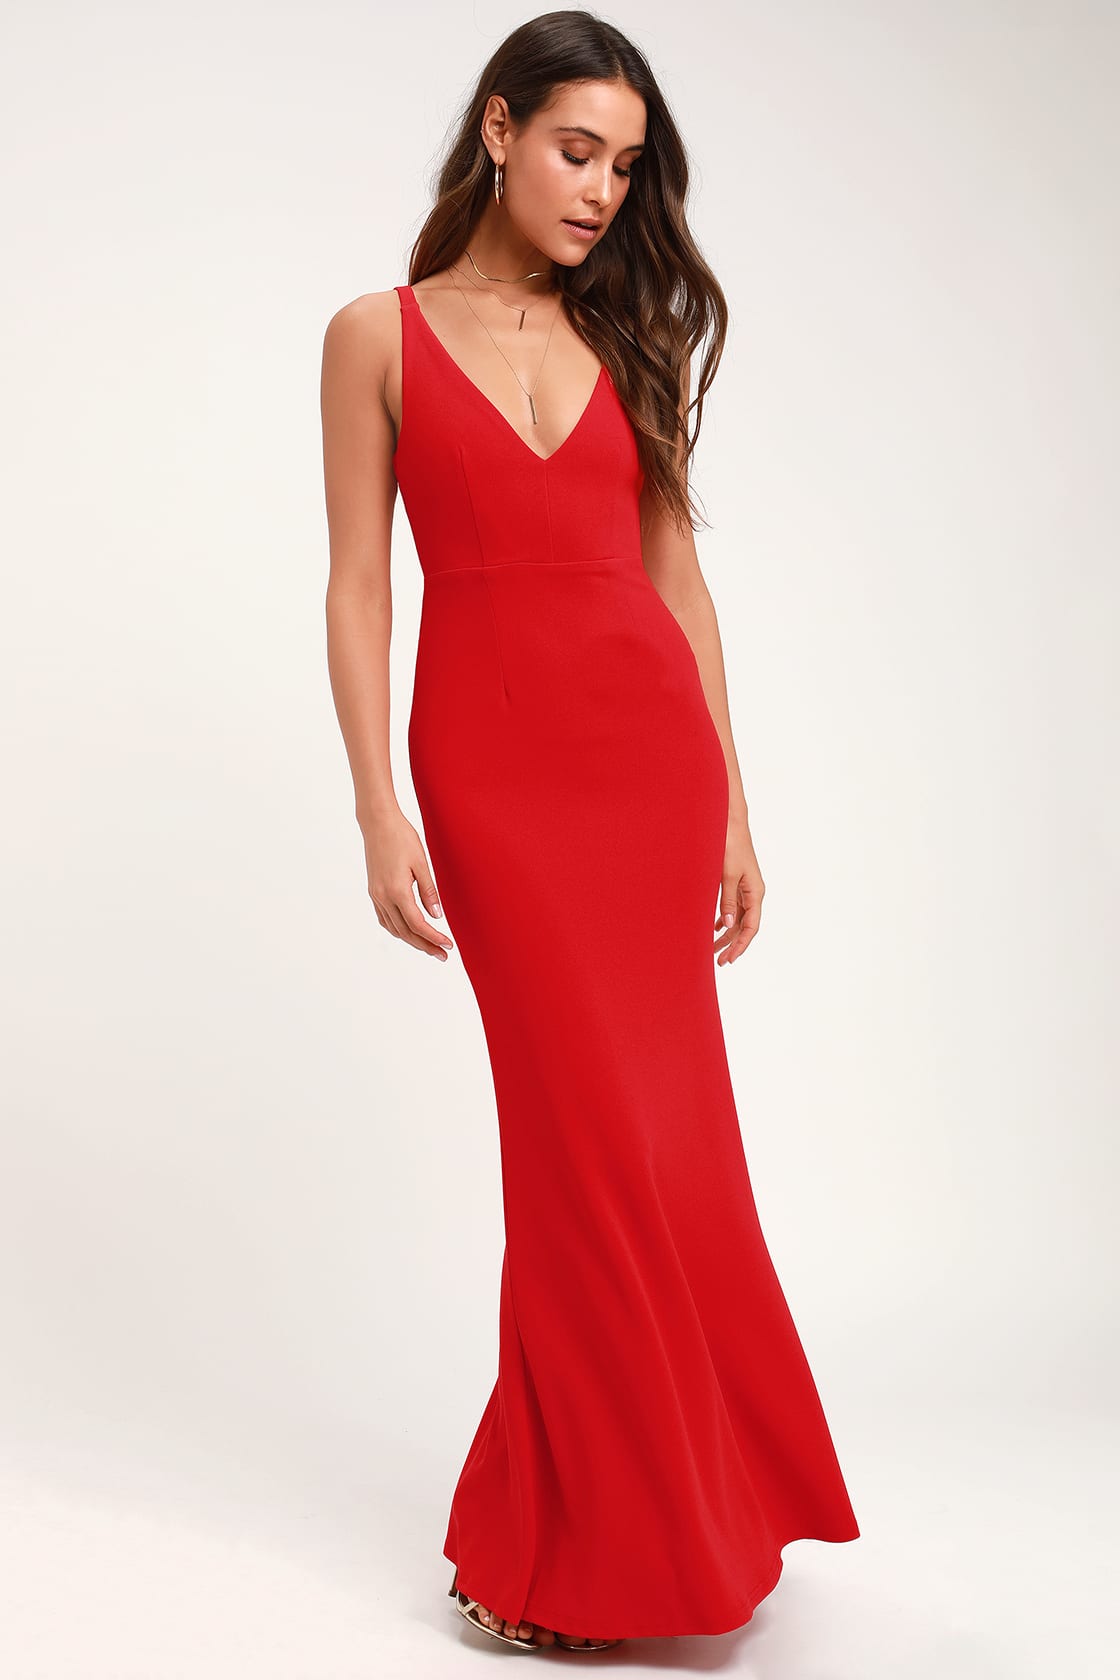 Melora Red Sleeveless Maxi Dress